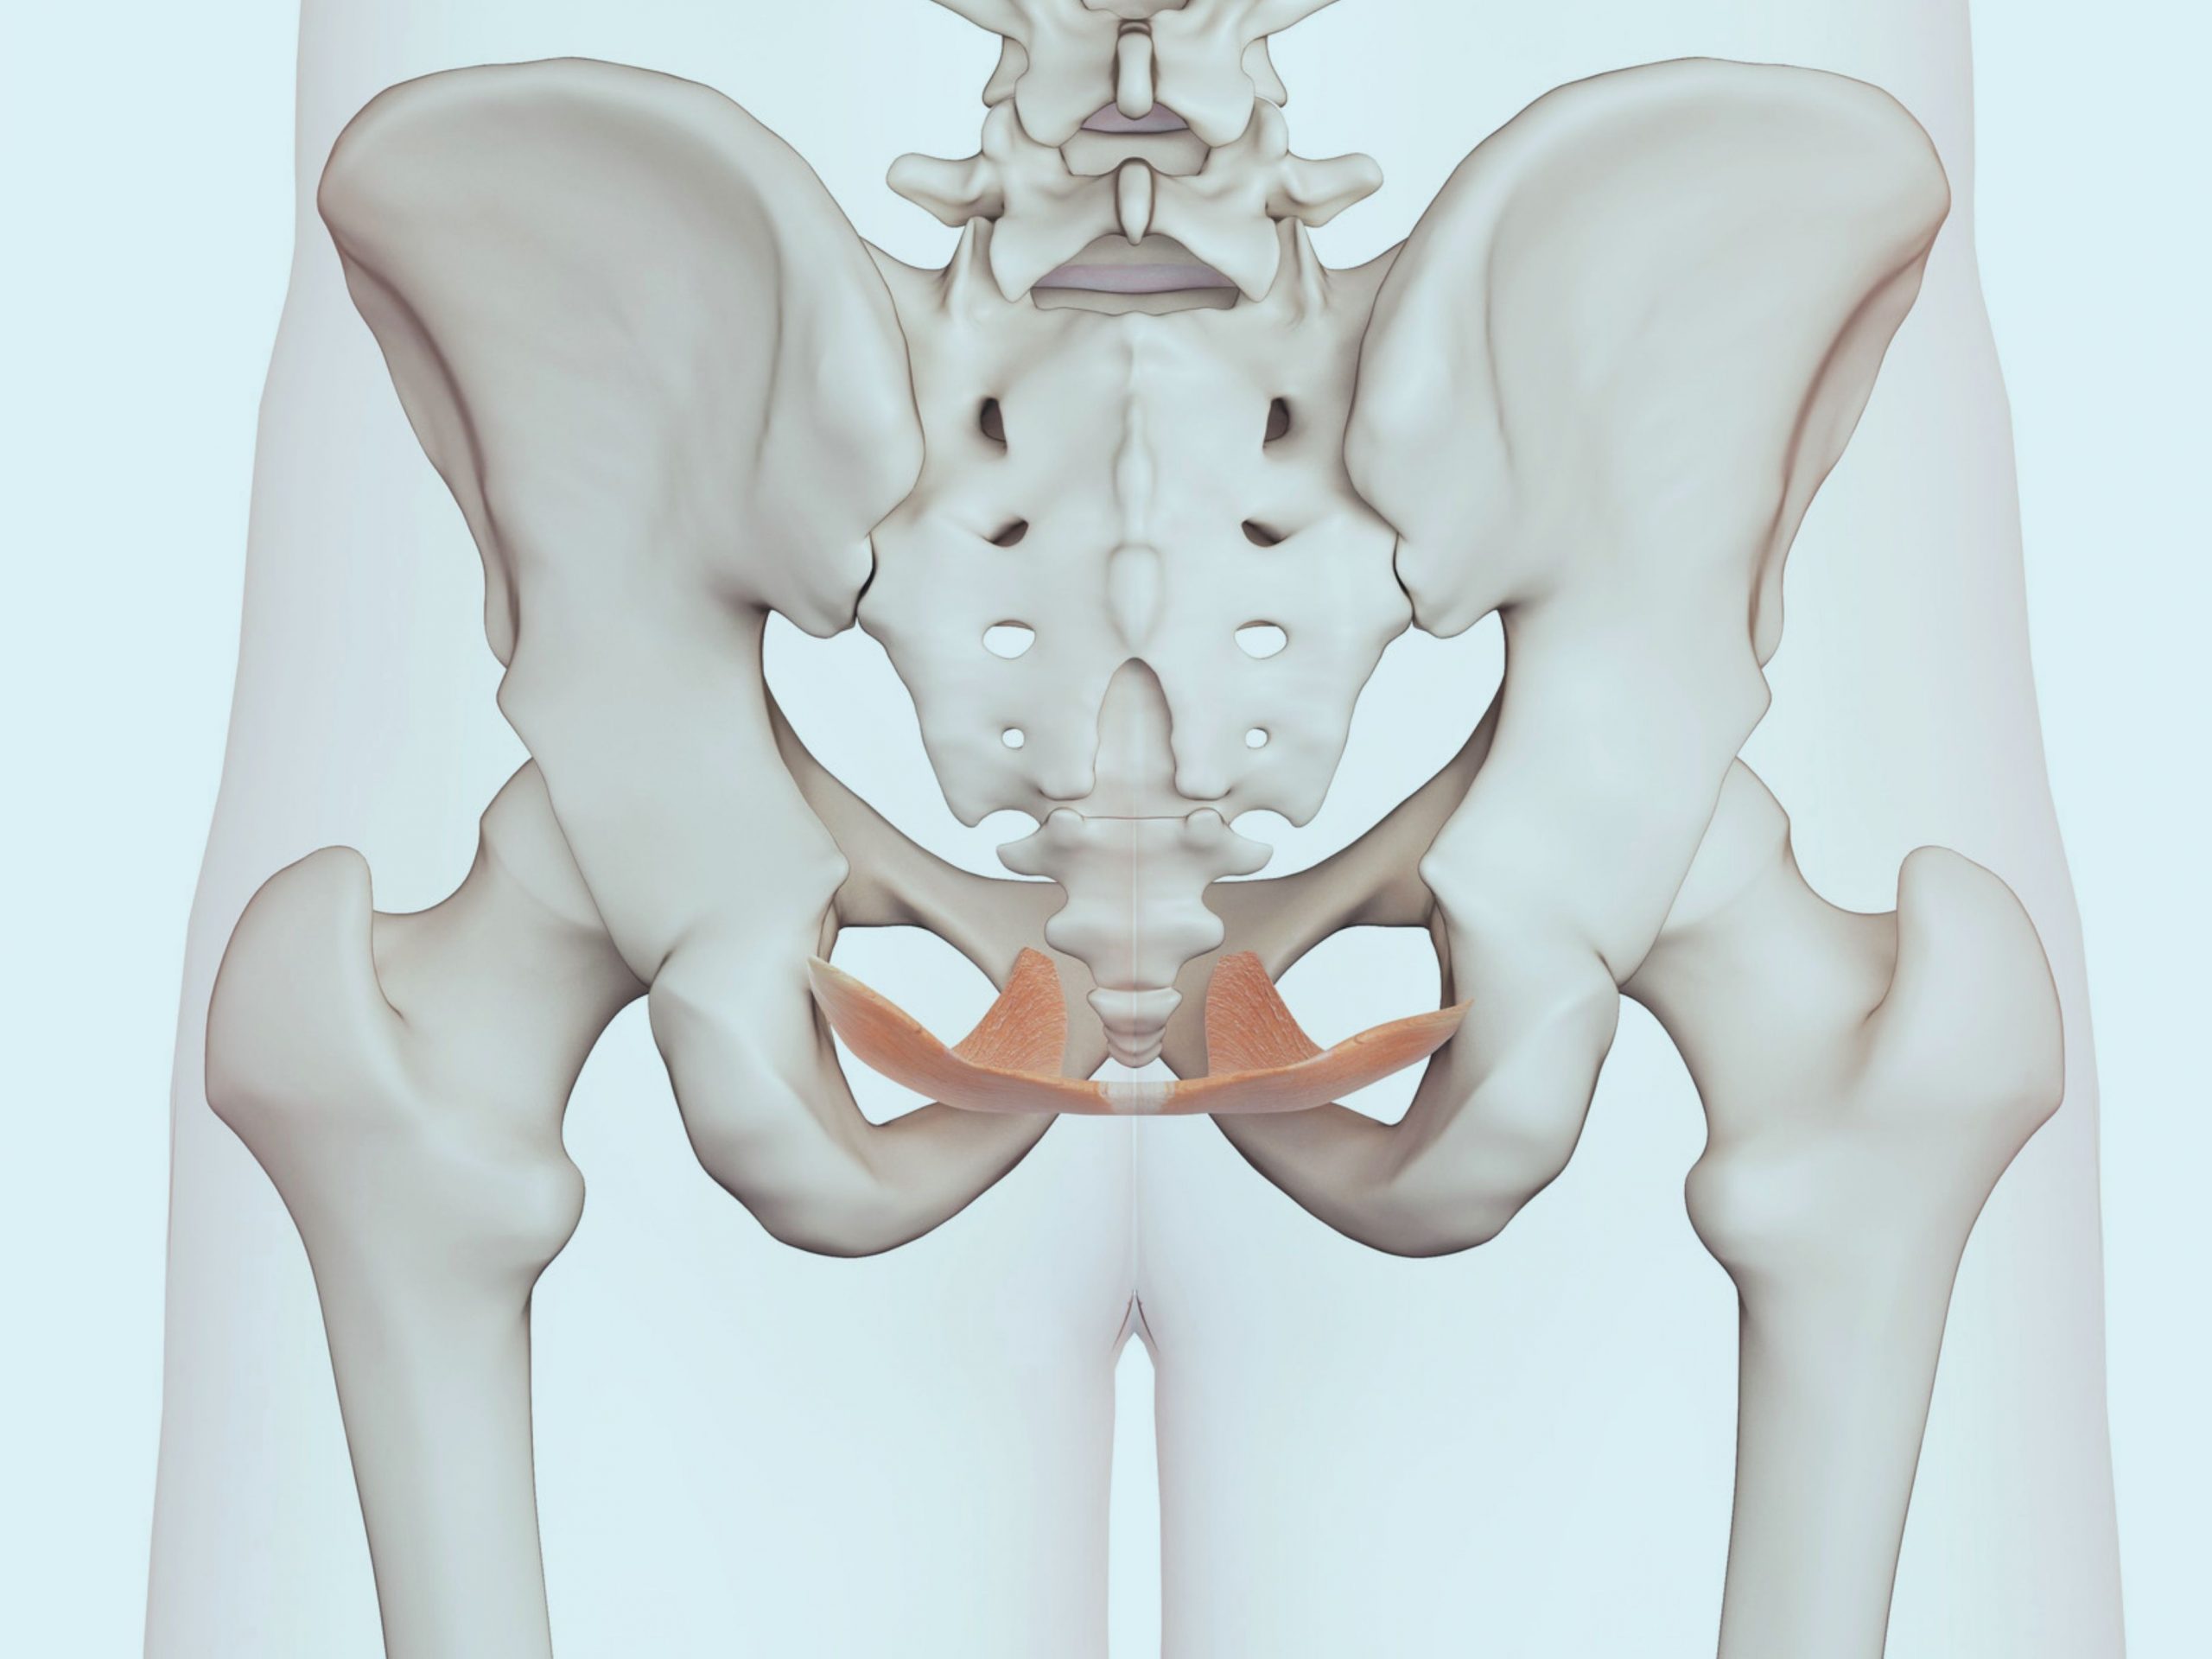 Lower back and pelvic girdle pain